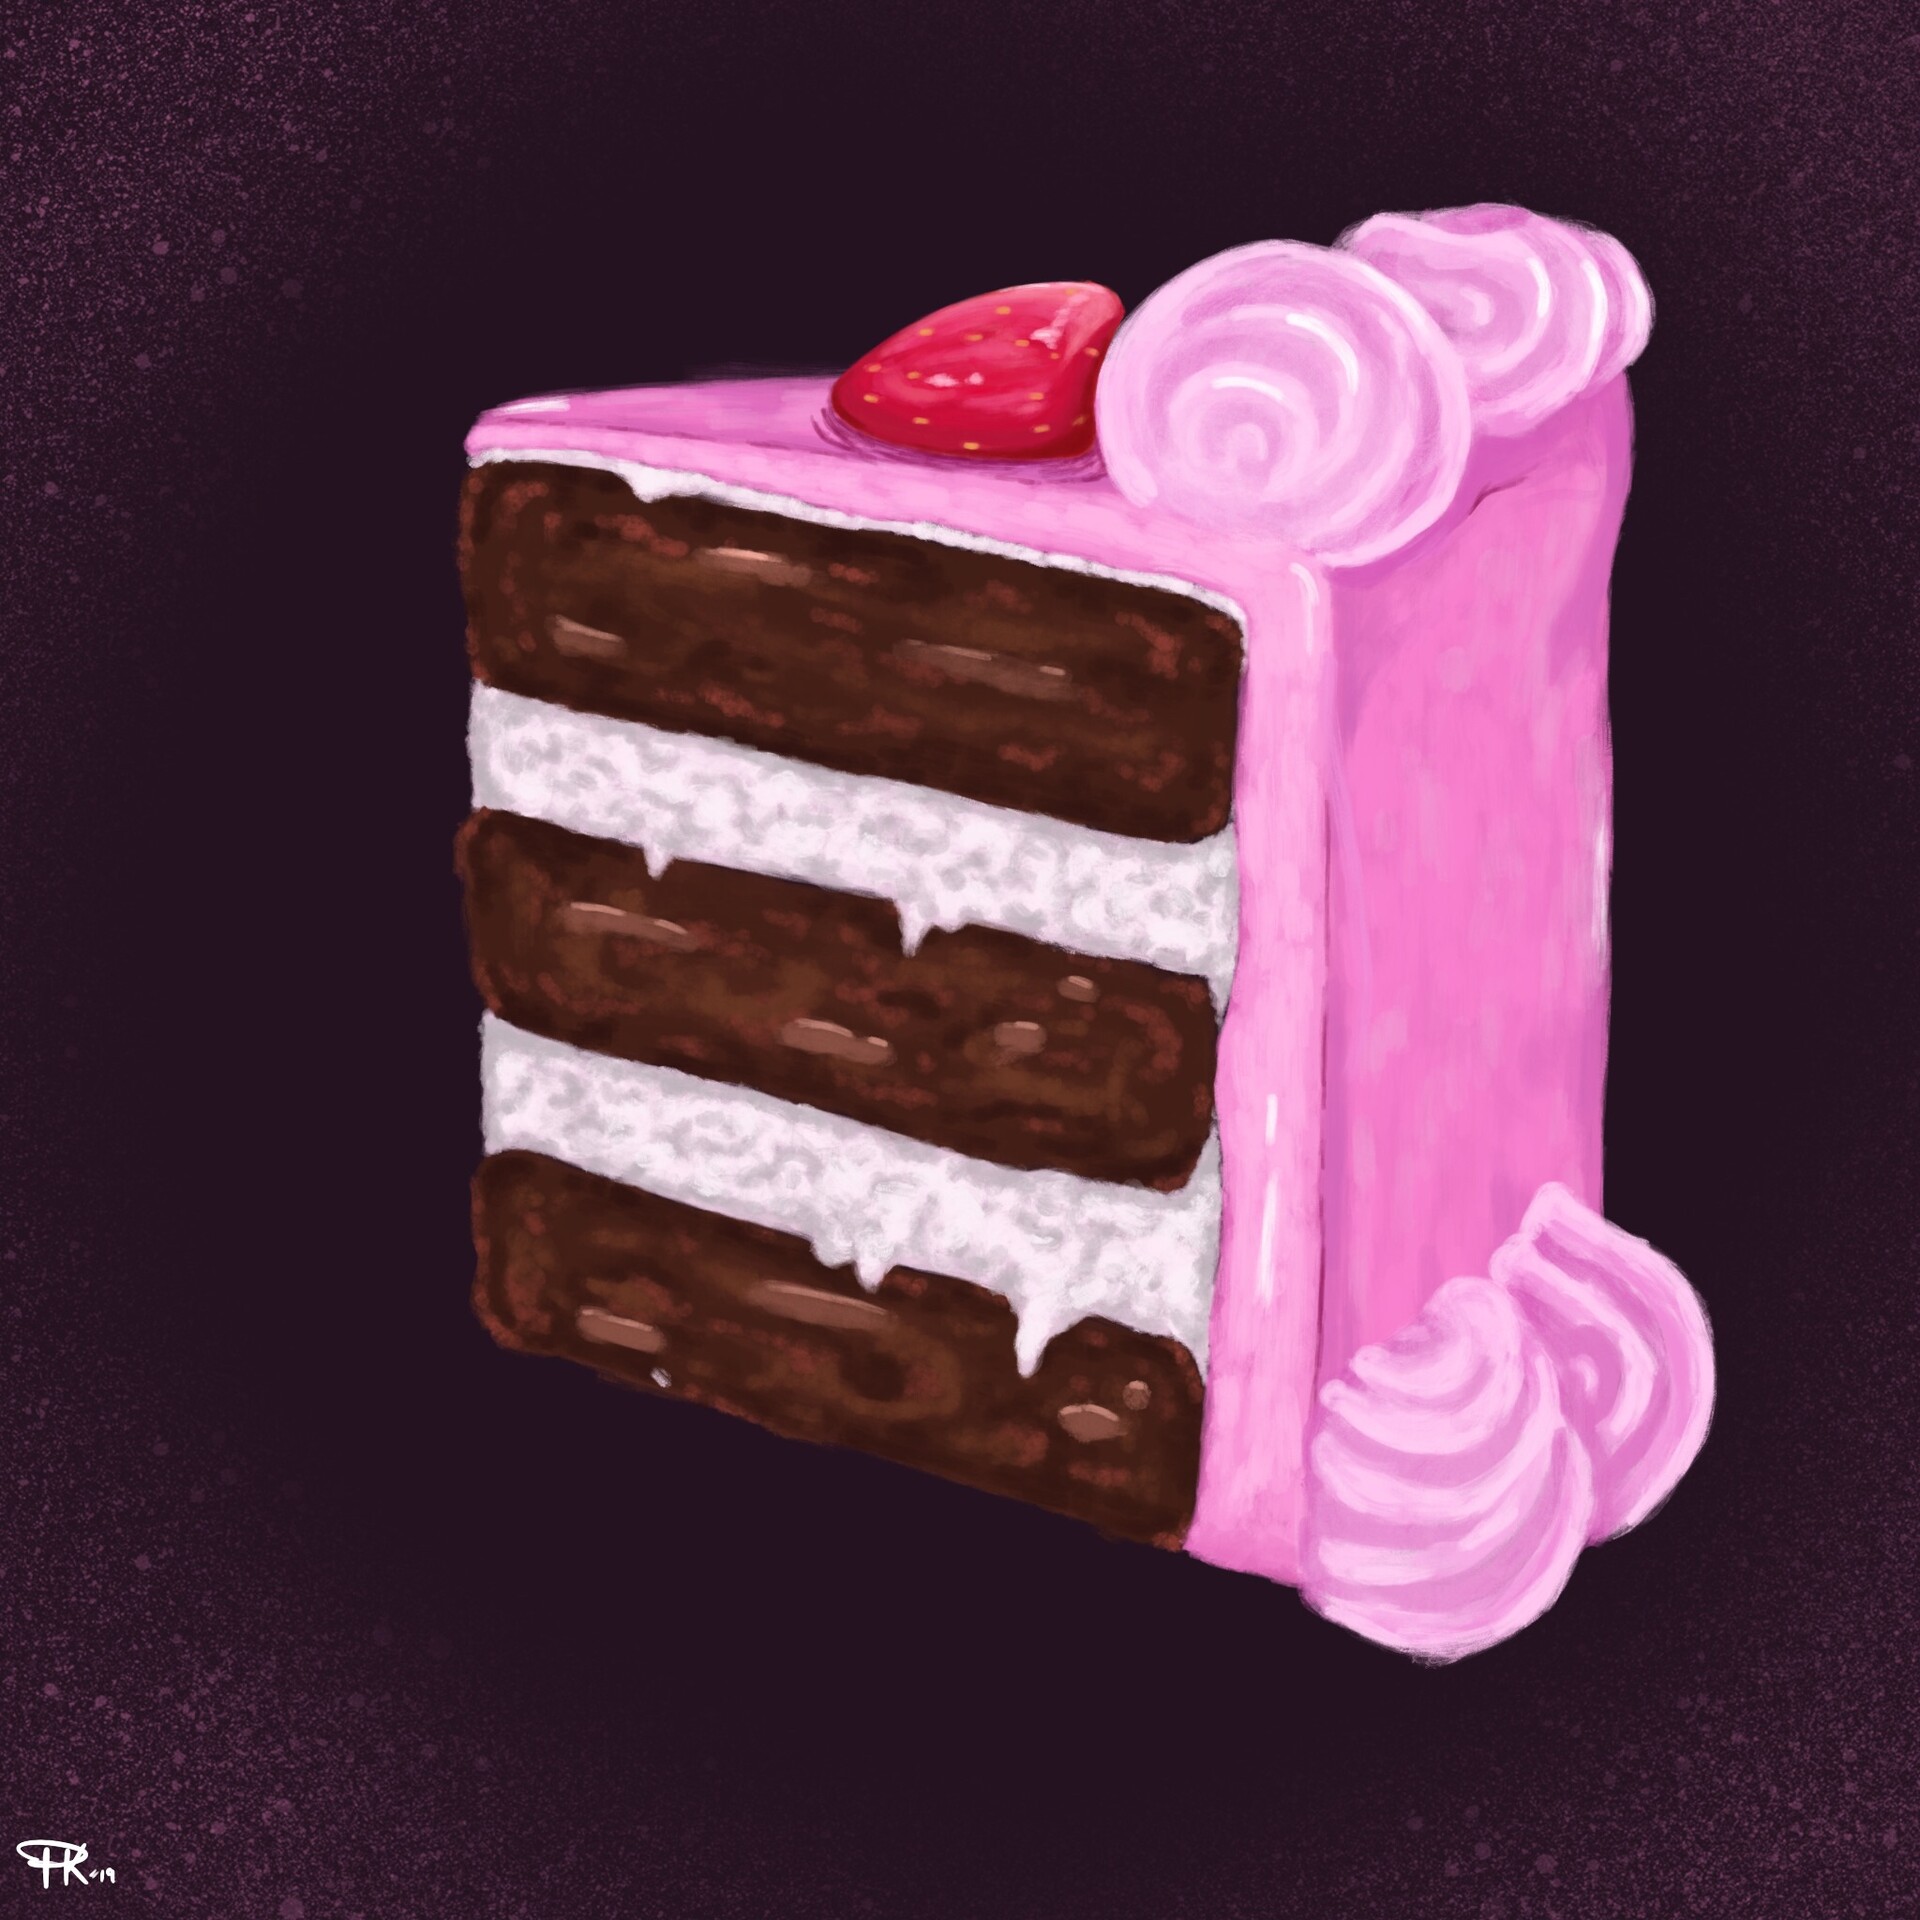 chocolate cake slice drawing